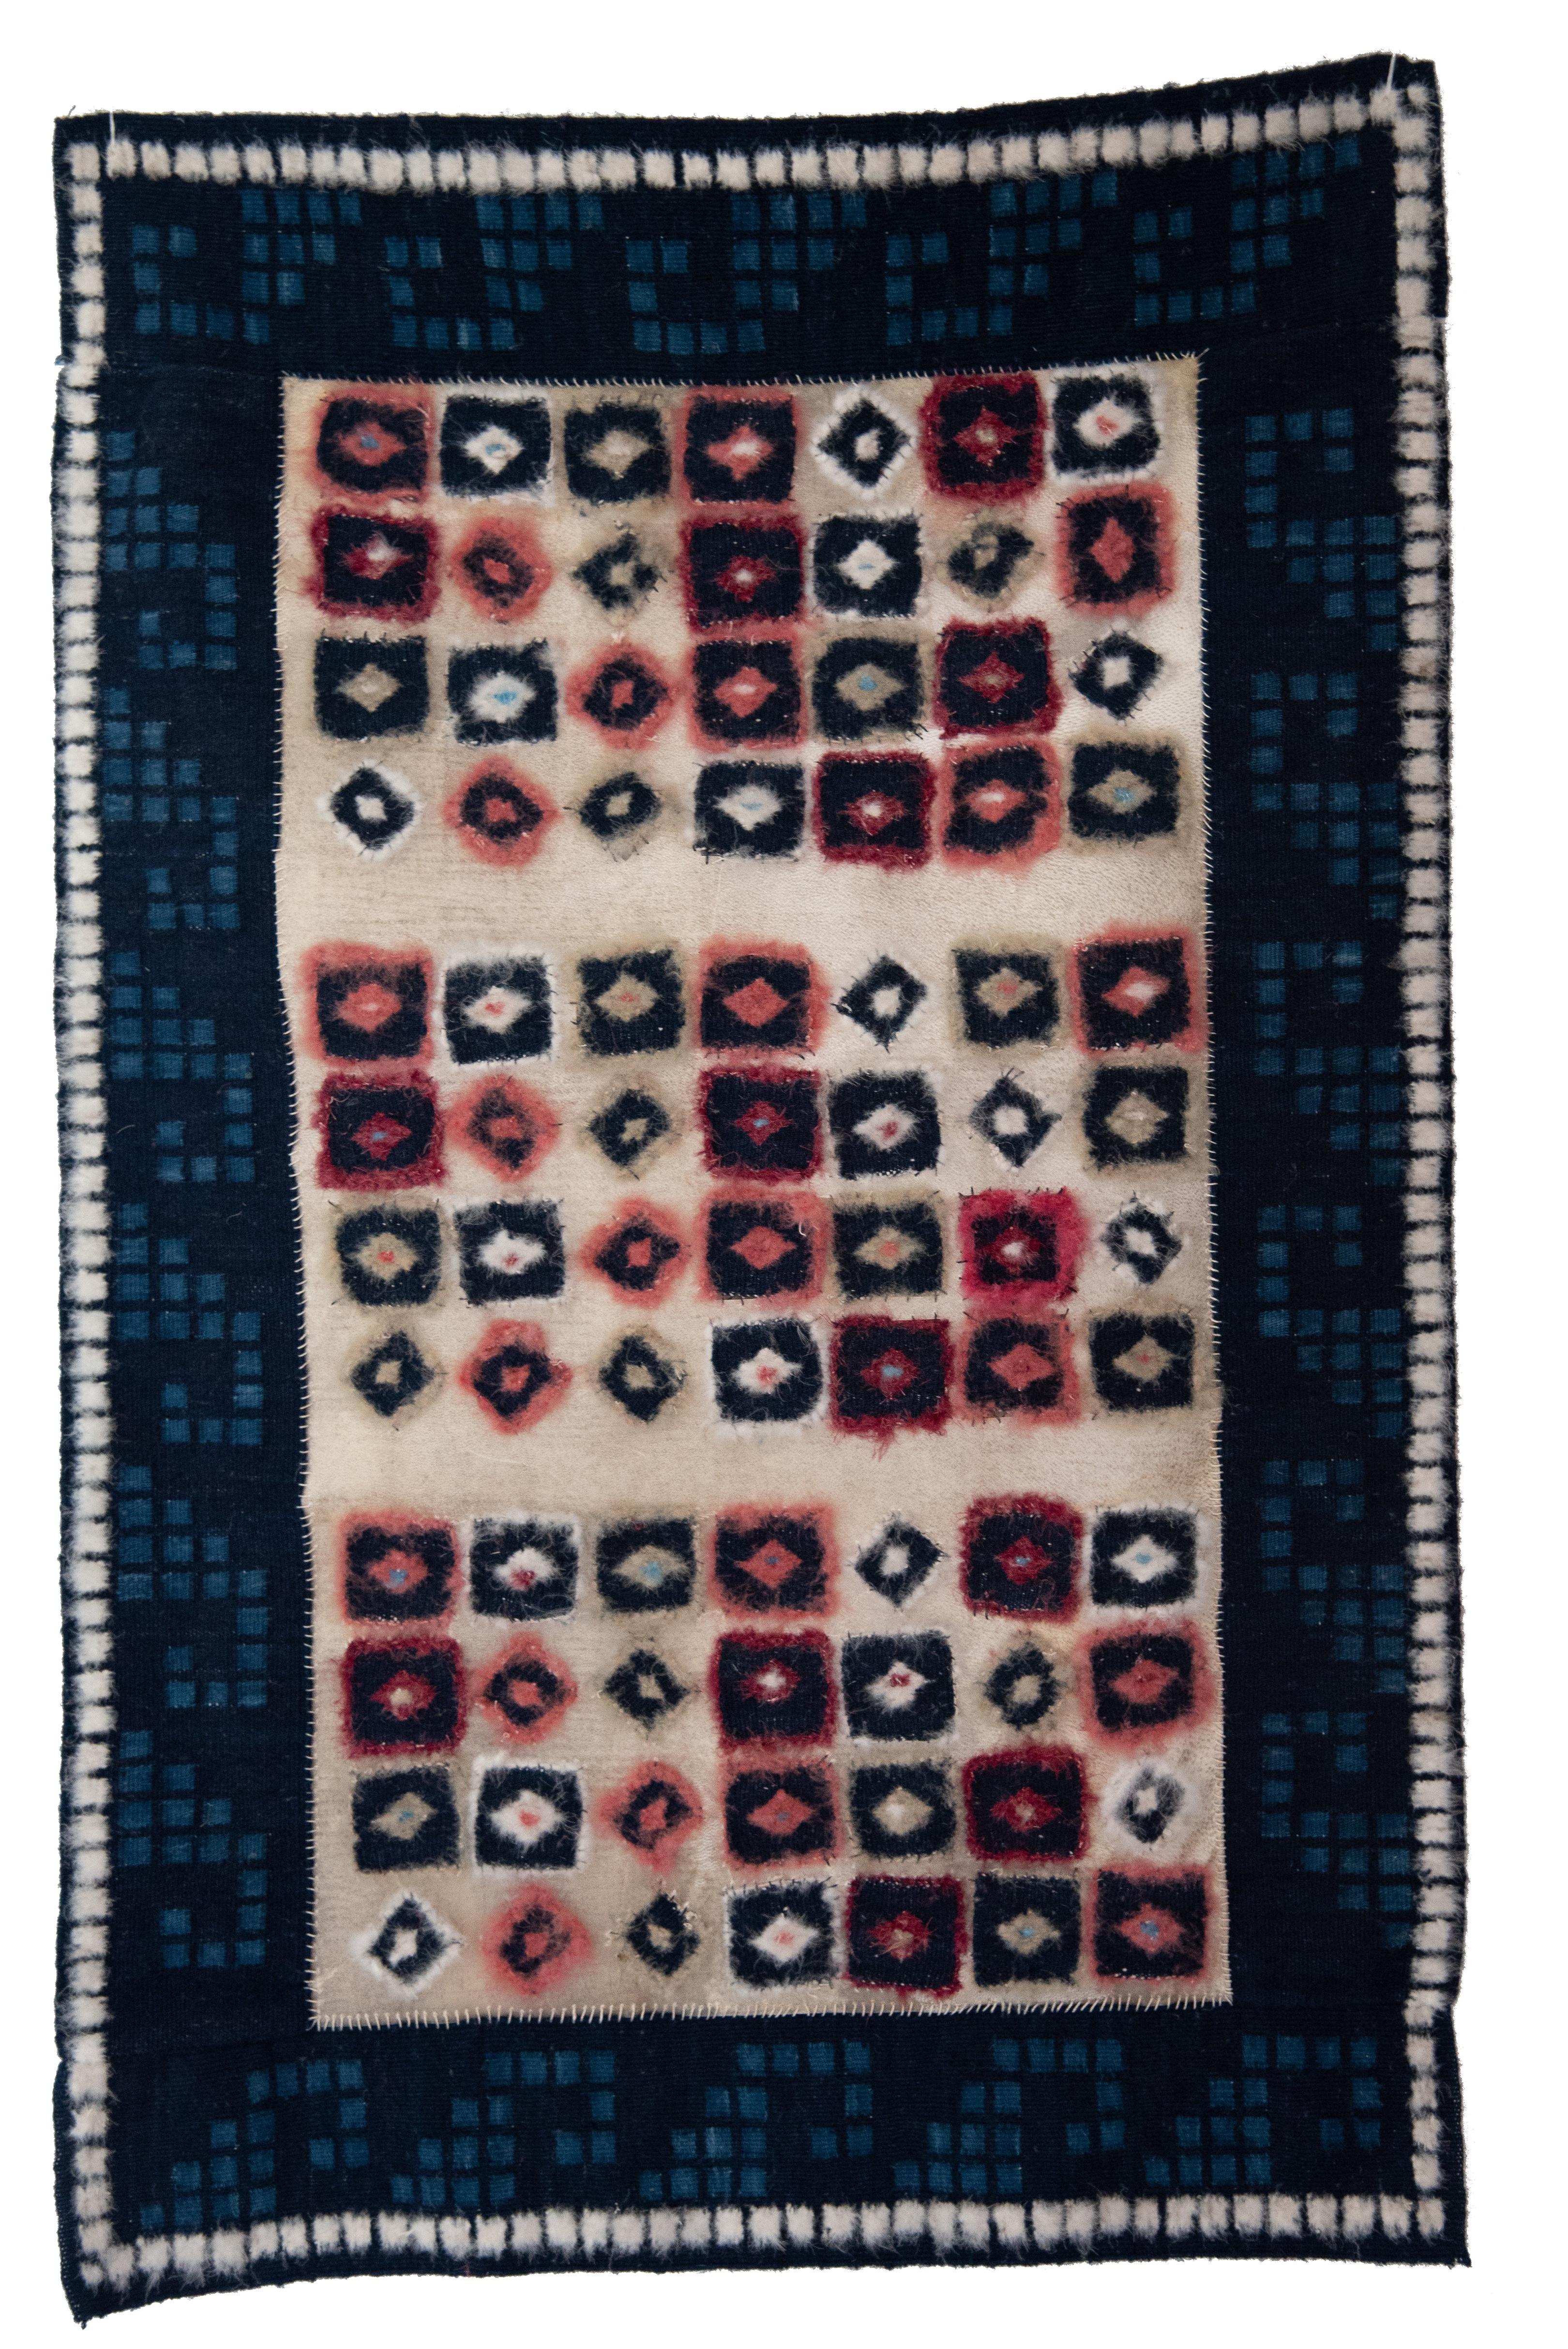 oaxaca handwoven rugs